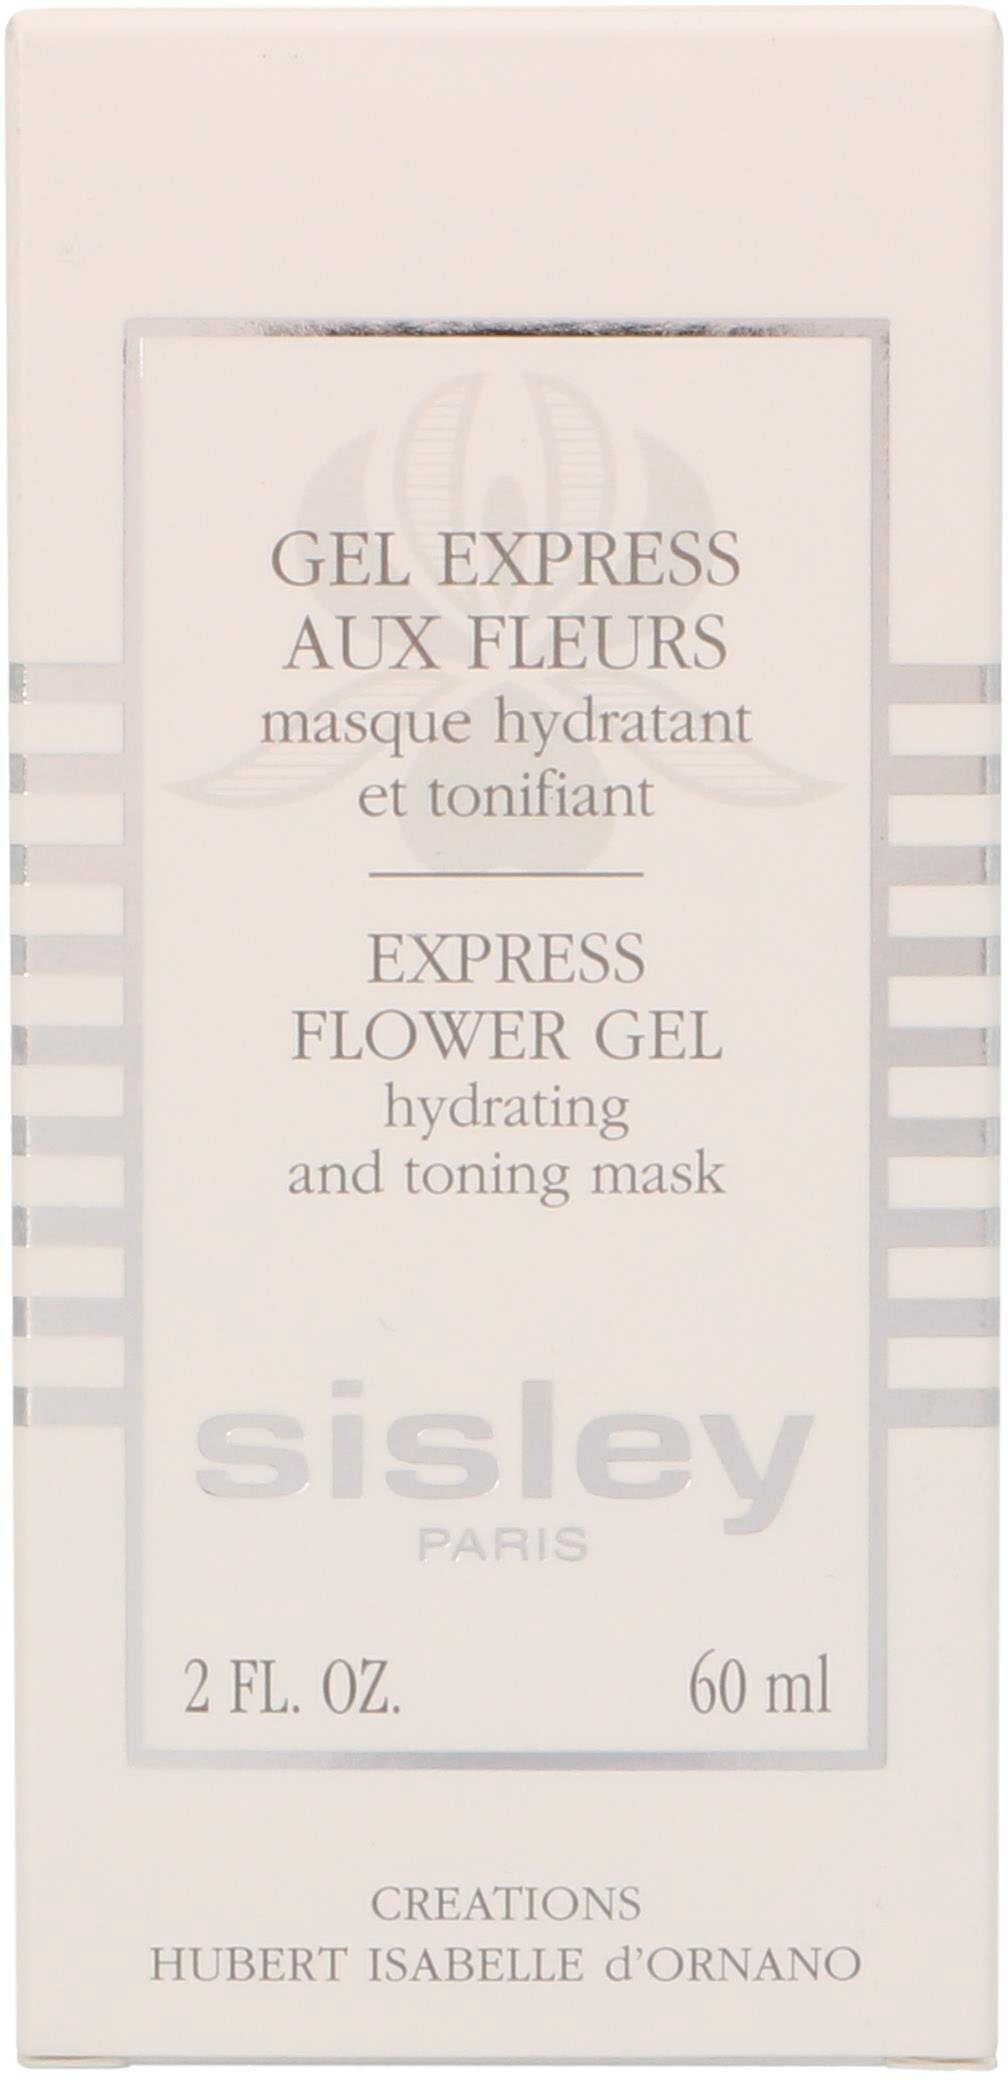 Express Gel Gesichtsgel Flower sisley